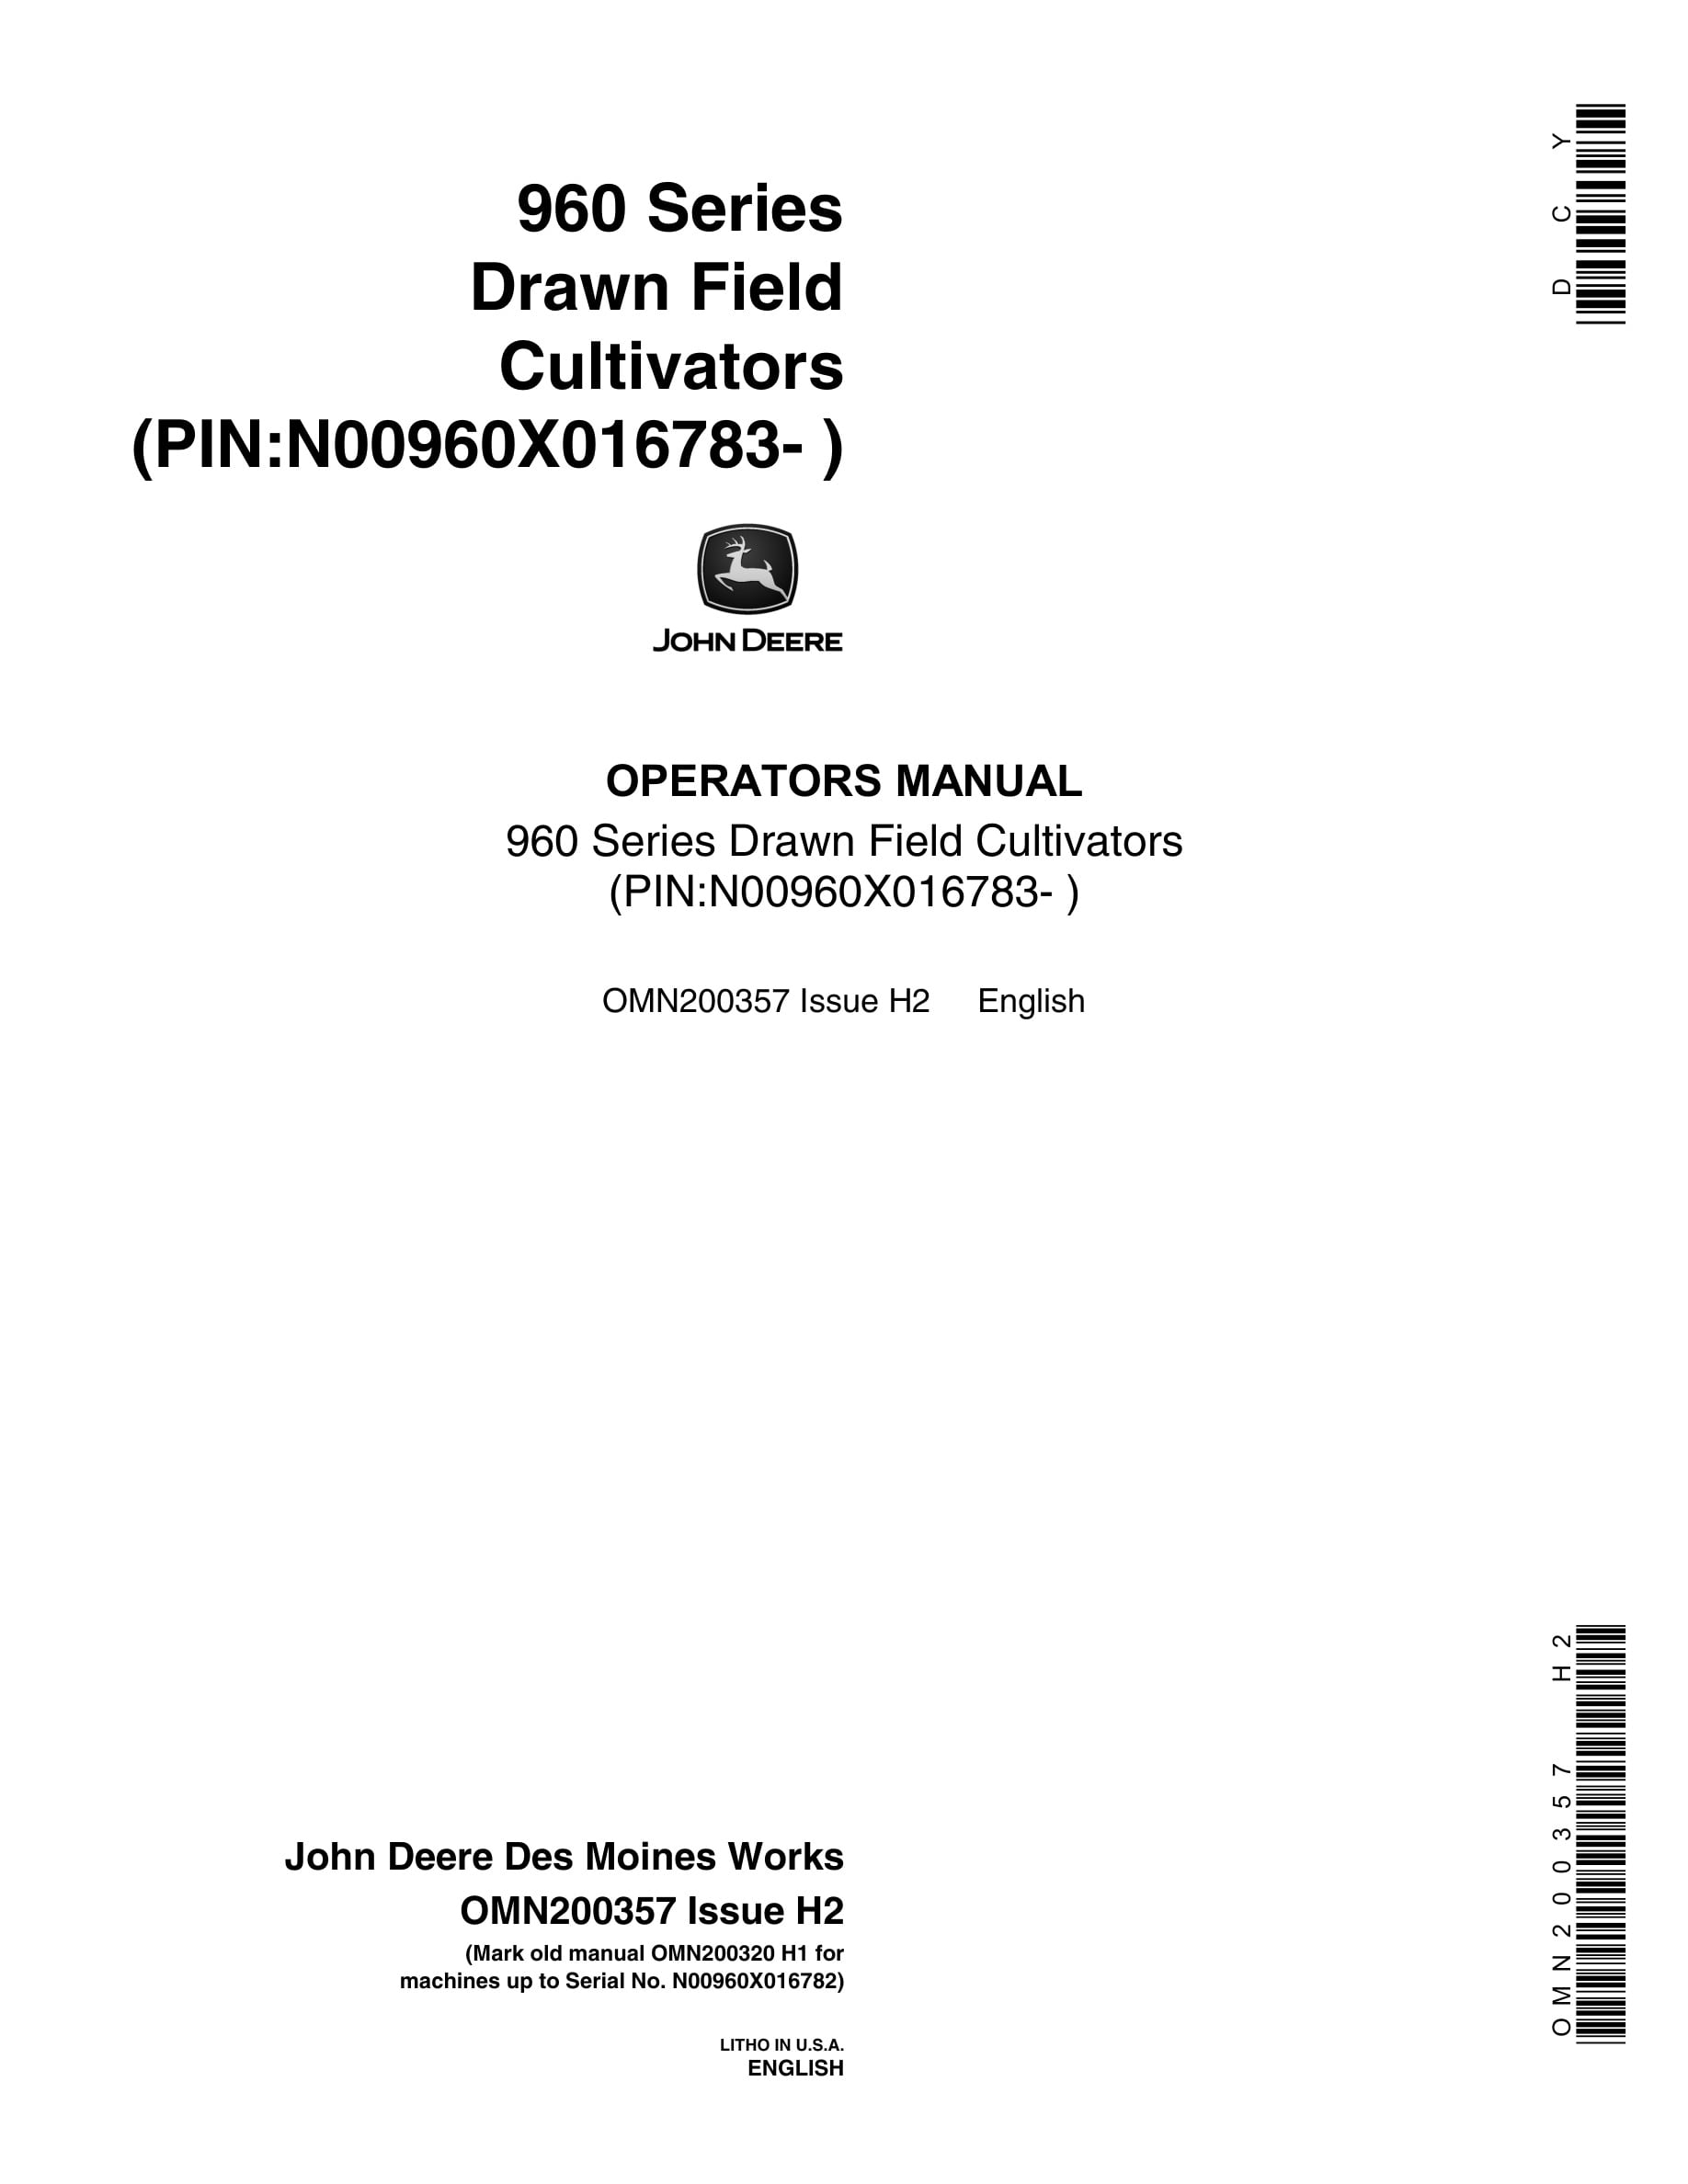 John Deere 960 Series Drawn Field CULTIVATOR Operator Manual OMN200357-1